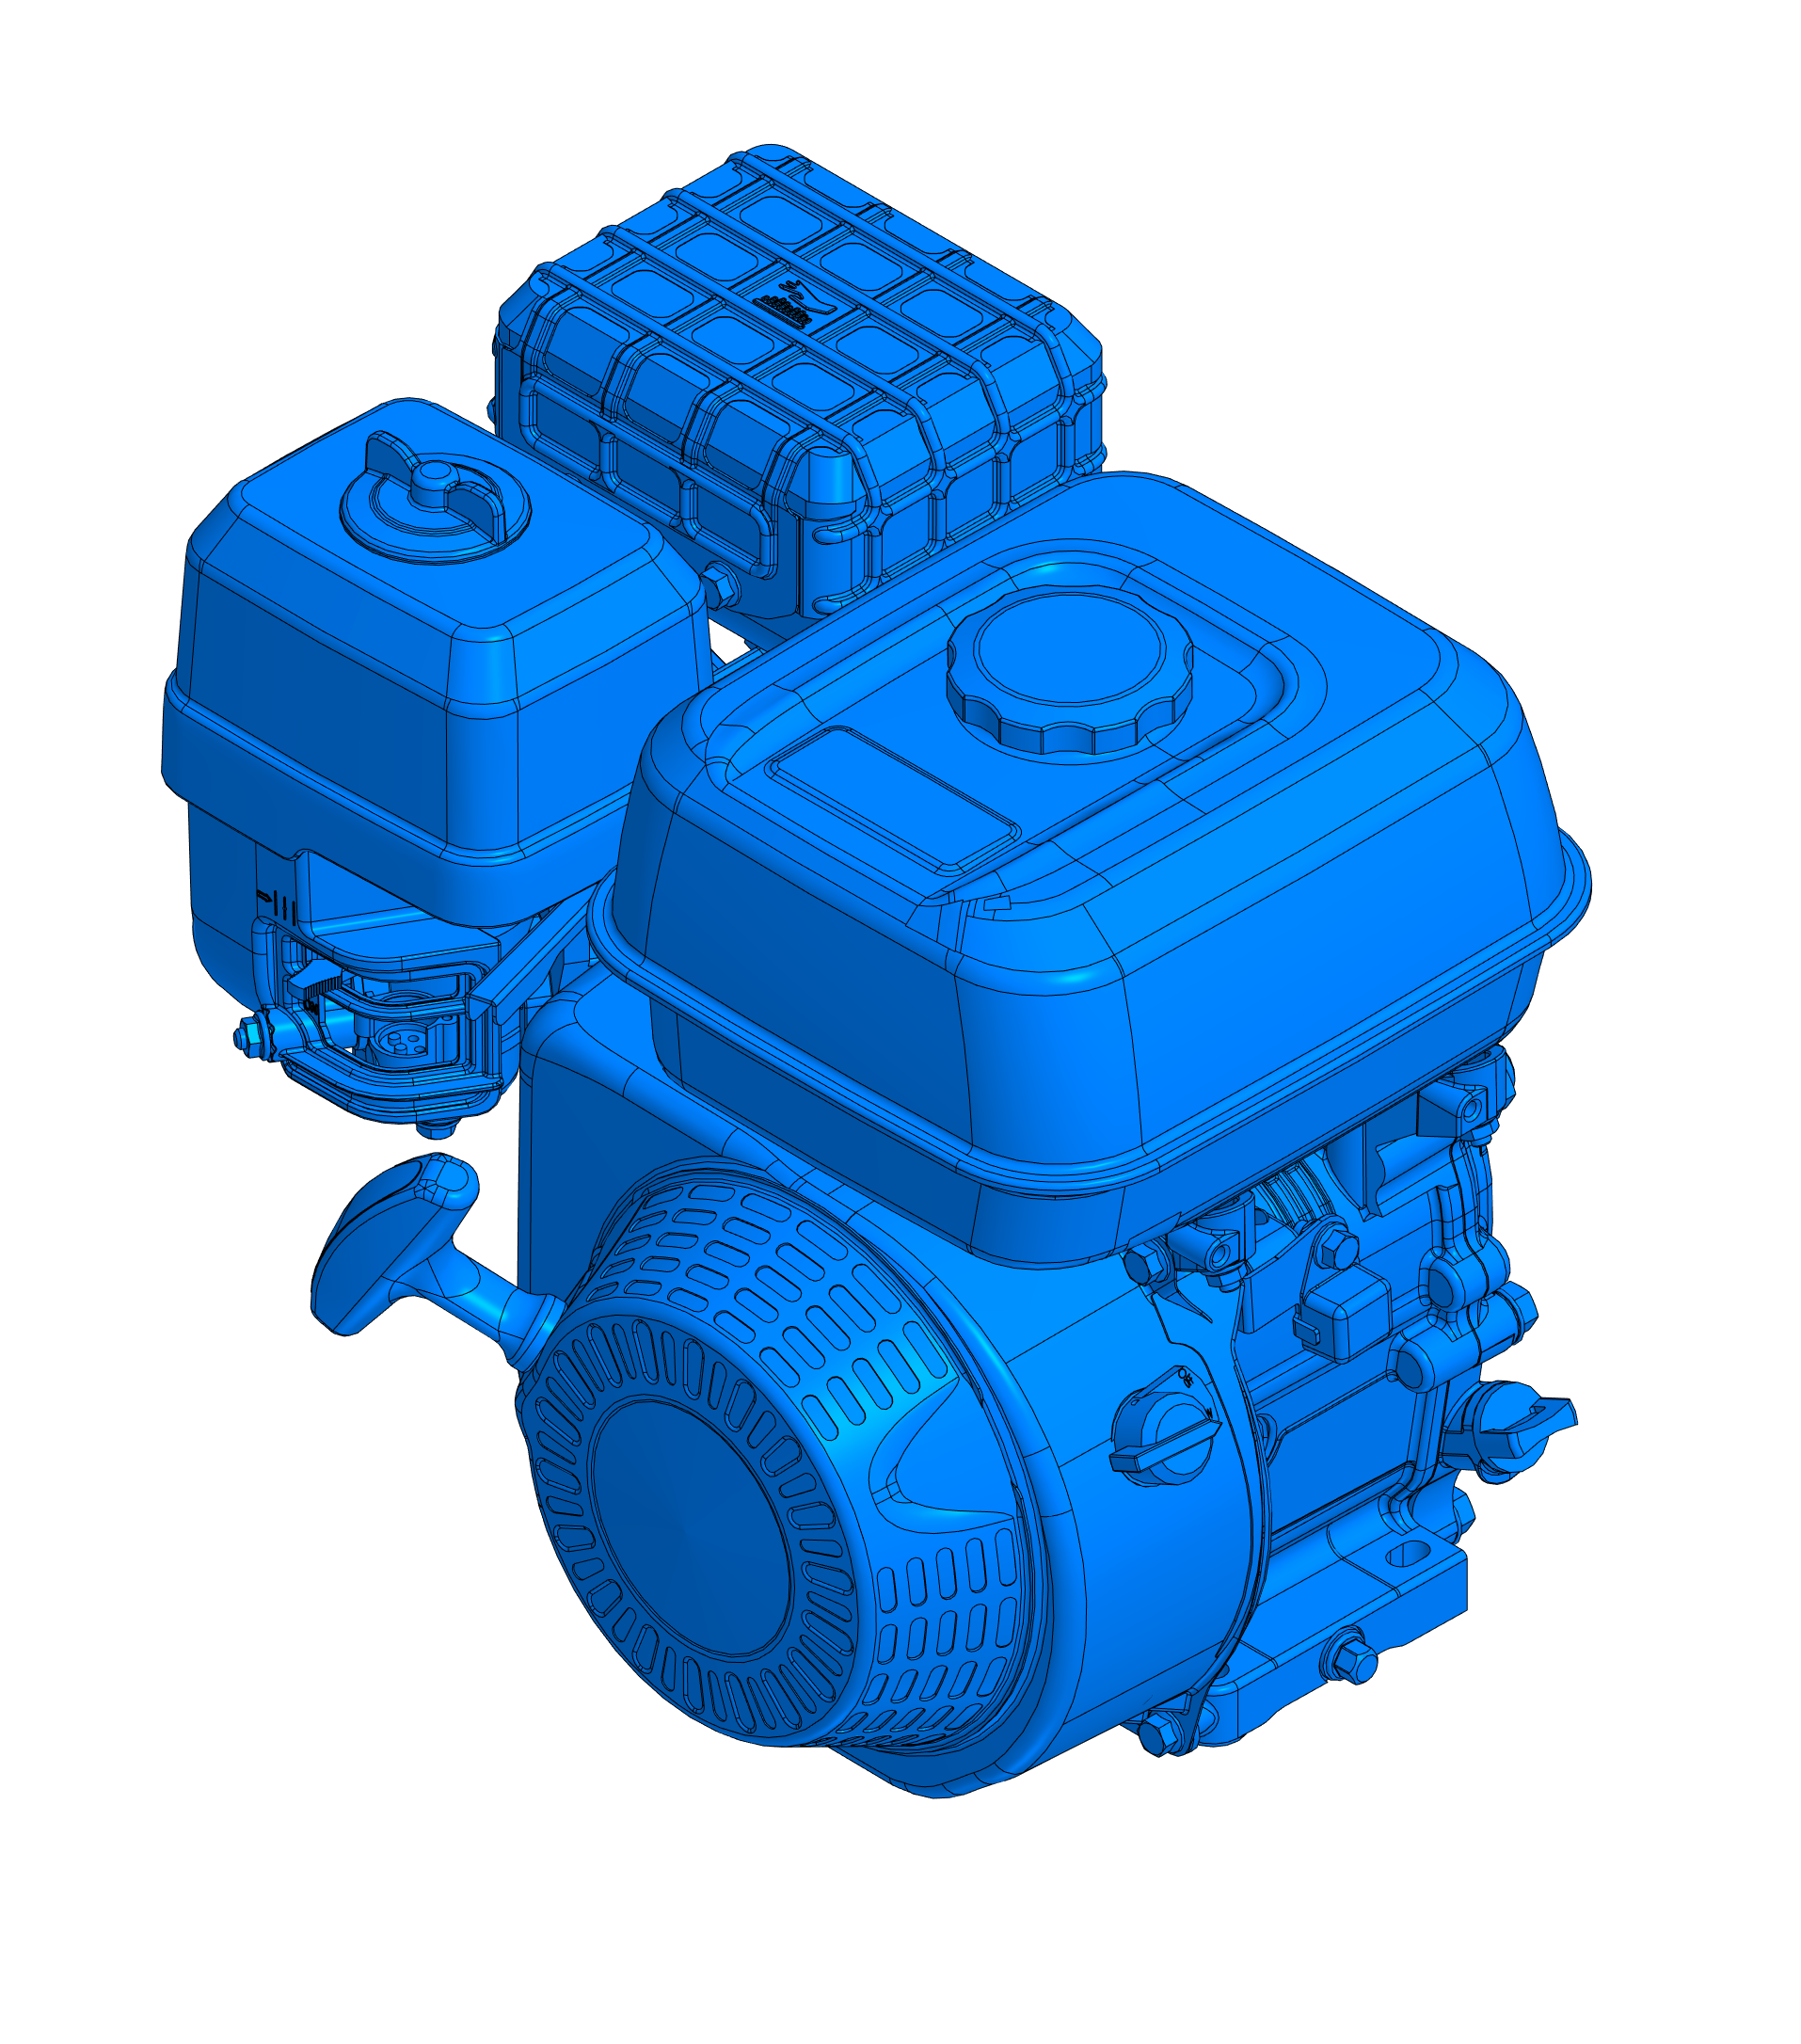  Zongshen GB210 - Чертежи, 3D Модели, Проекты, Двигатели